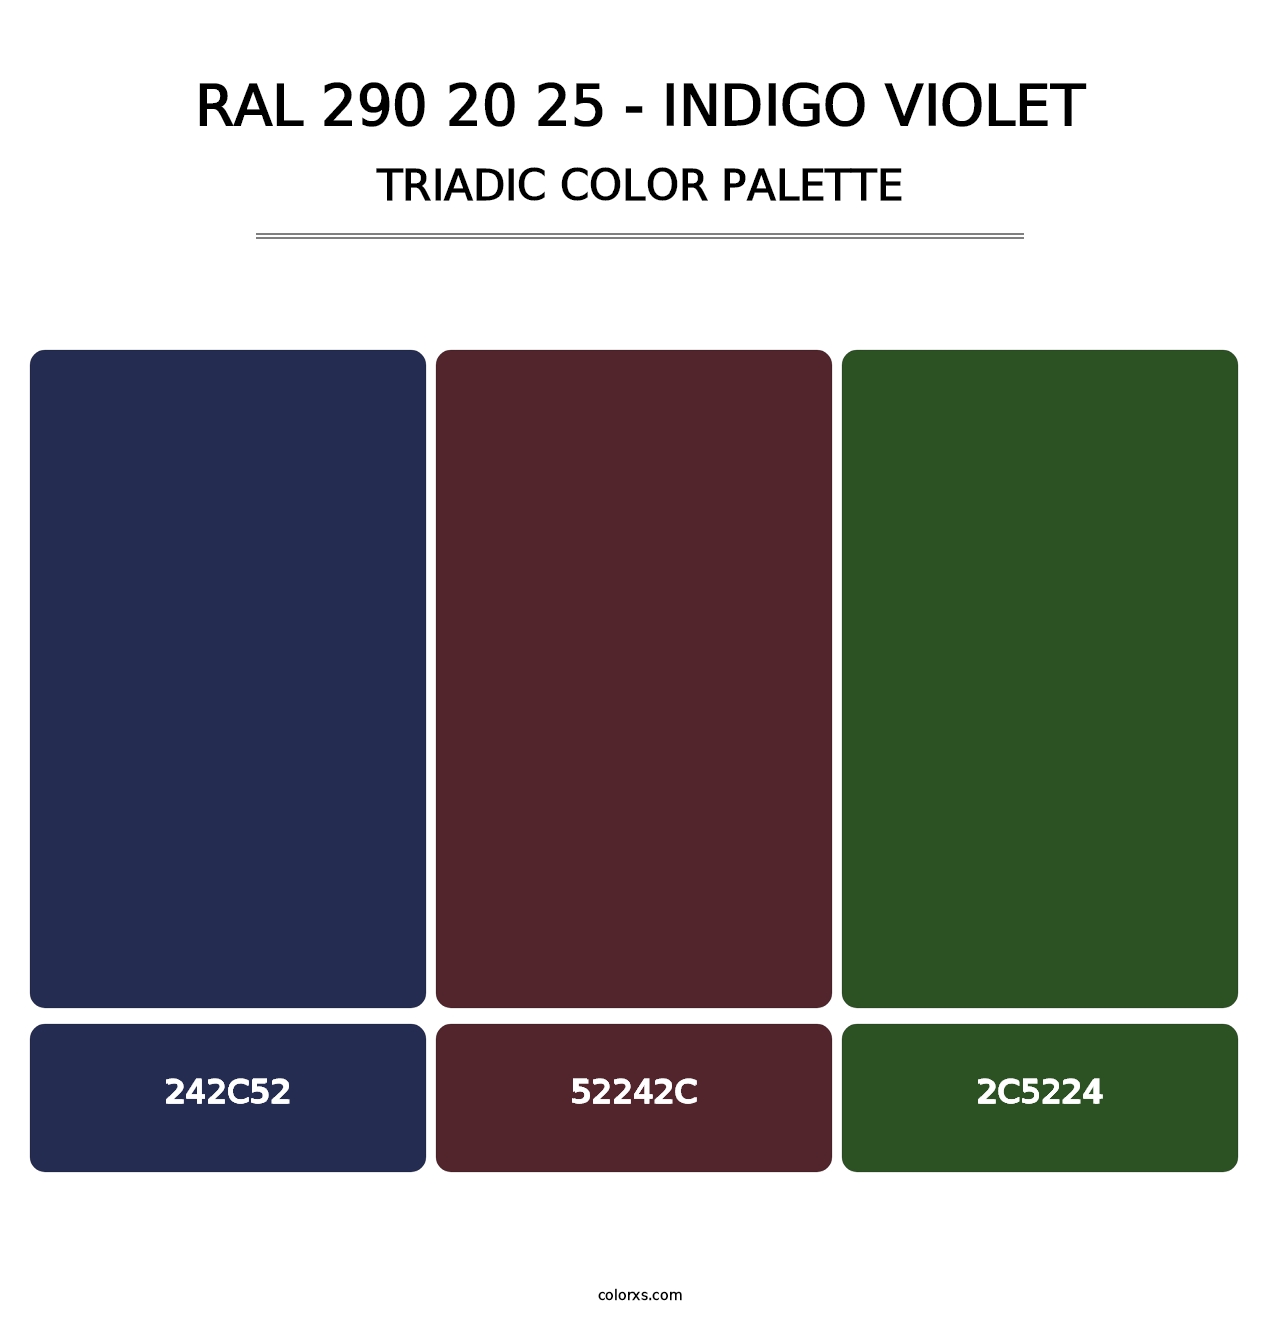 RAL 290 20 25 - Indigo Violet - Triadic Color Palette